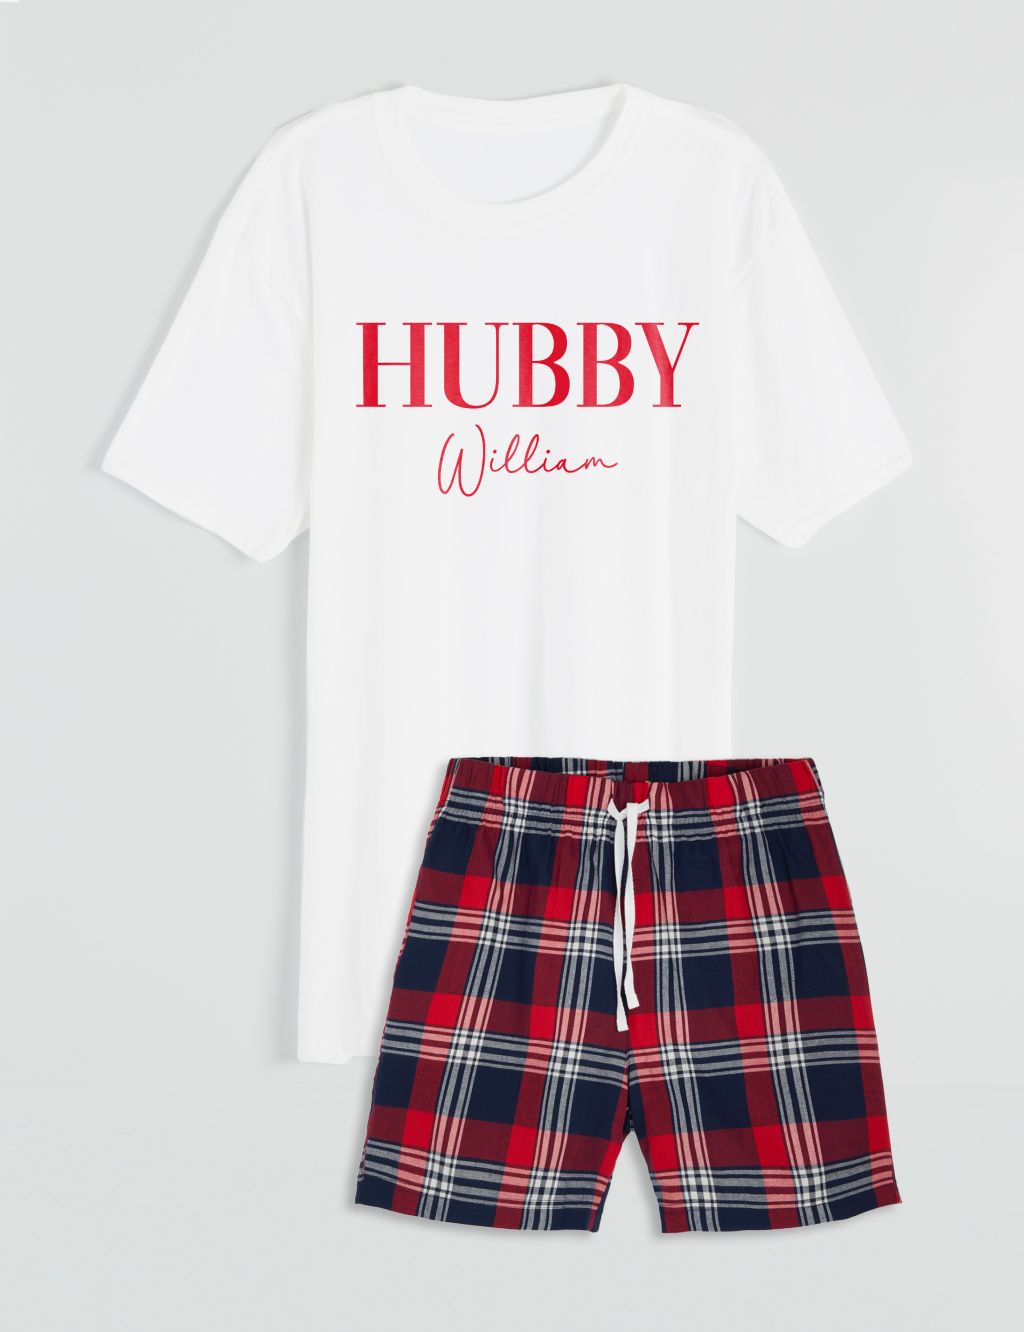 Personalised Hubby Pyjama Set image 1